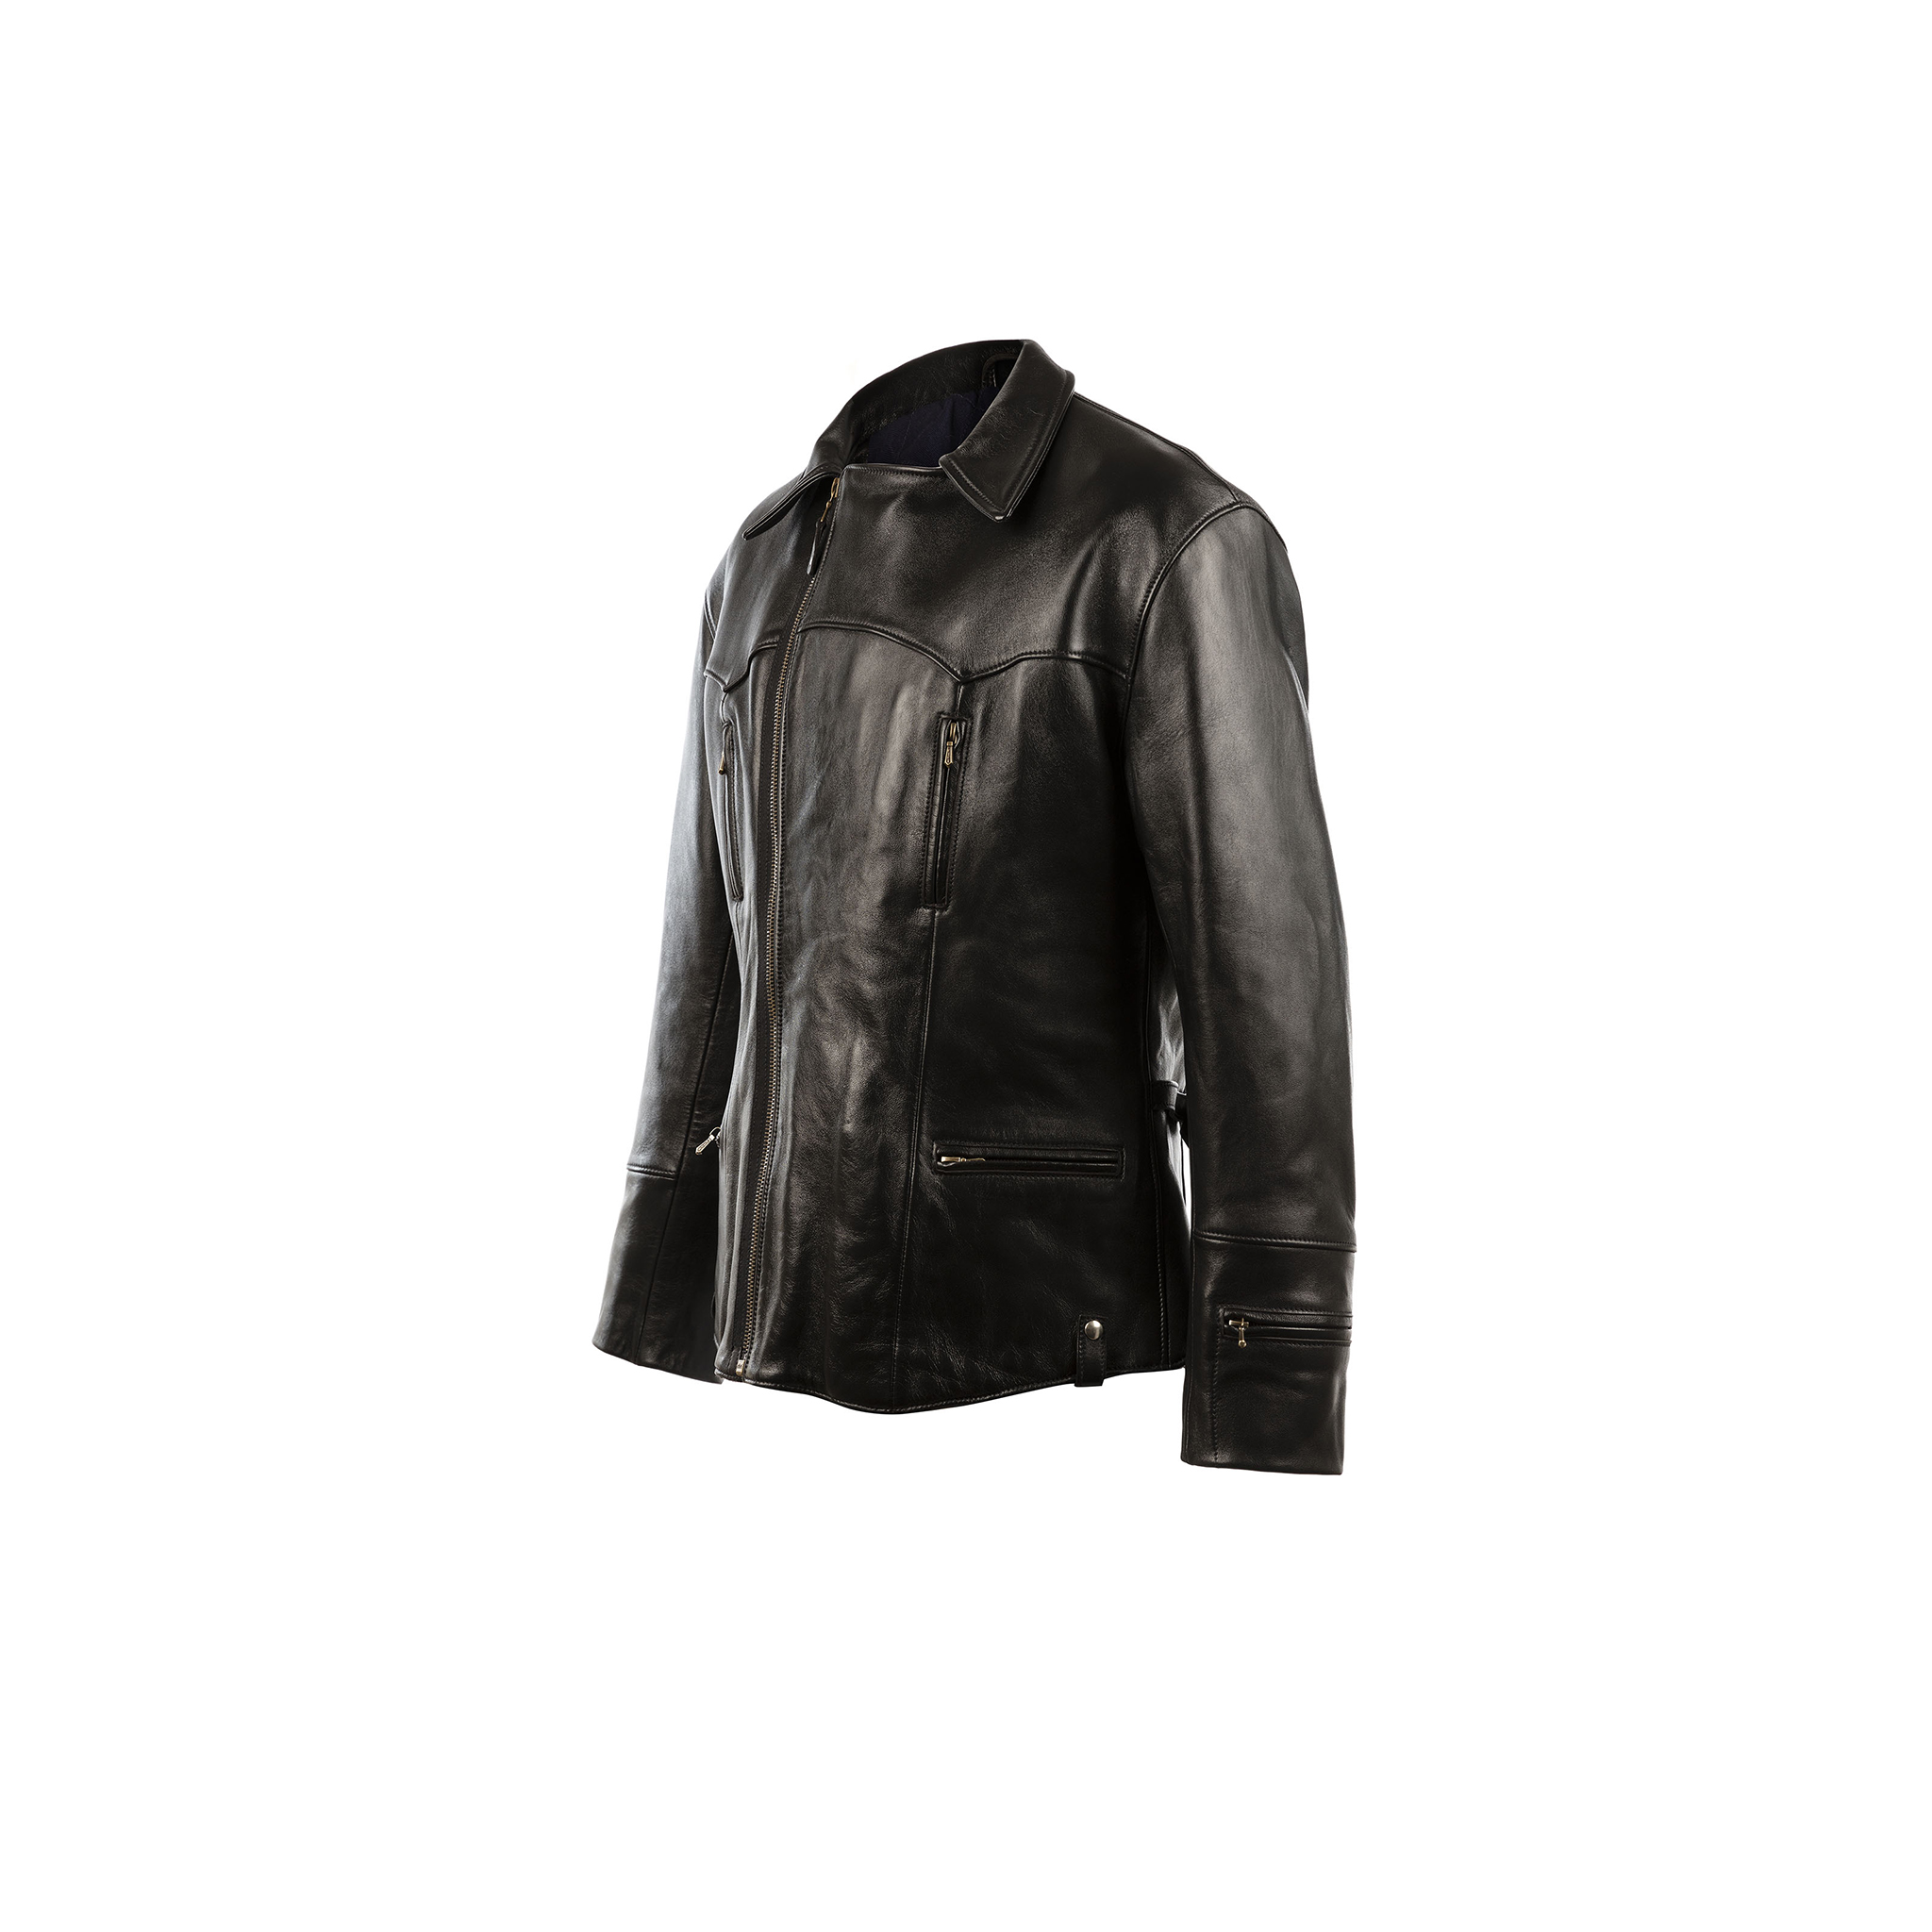 Eagle Jacket - Glossy leather - Black color